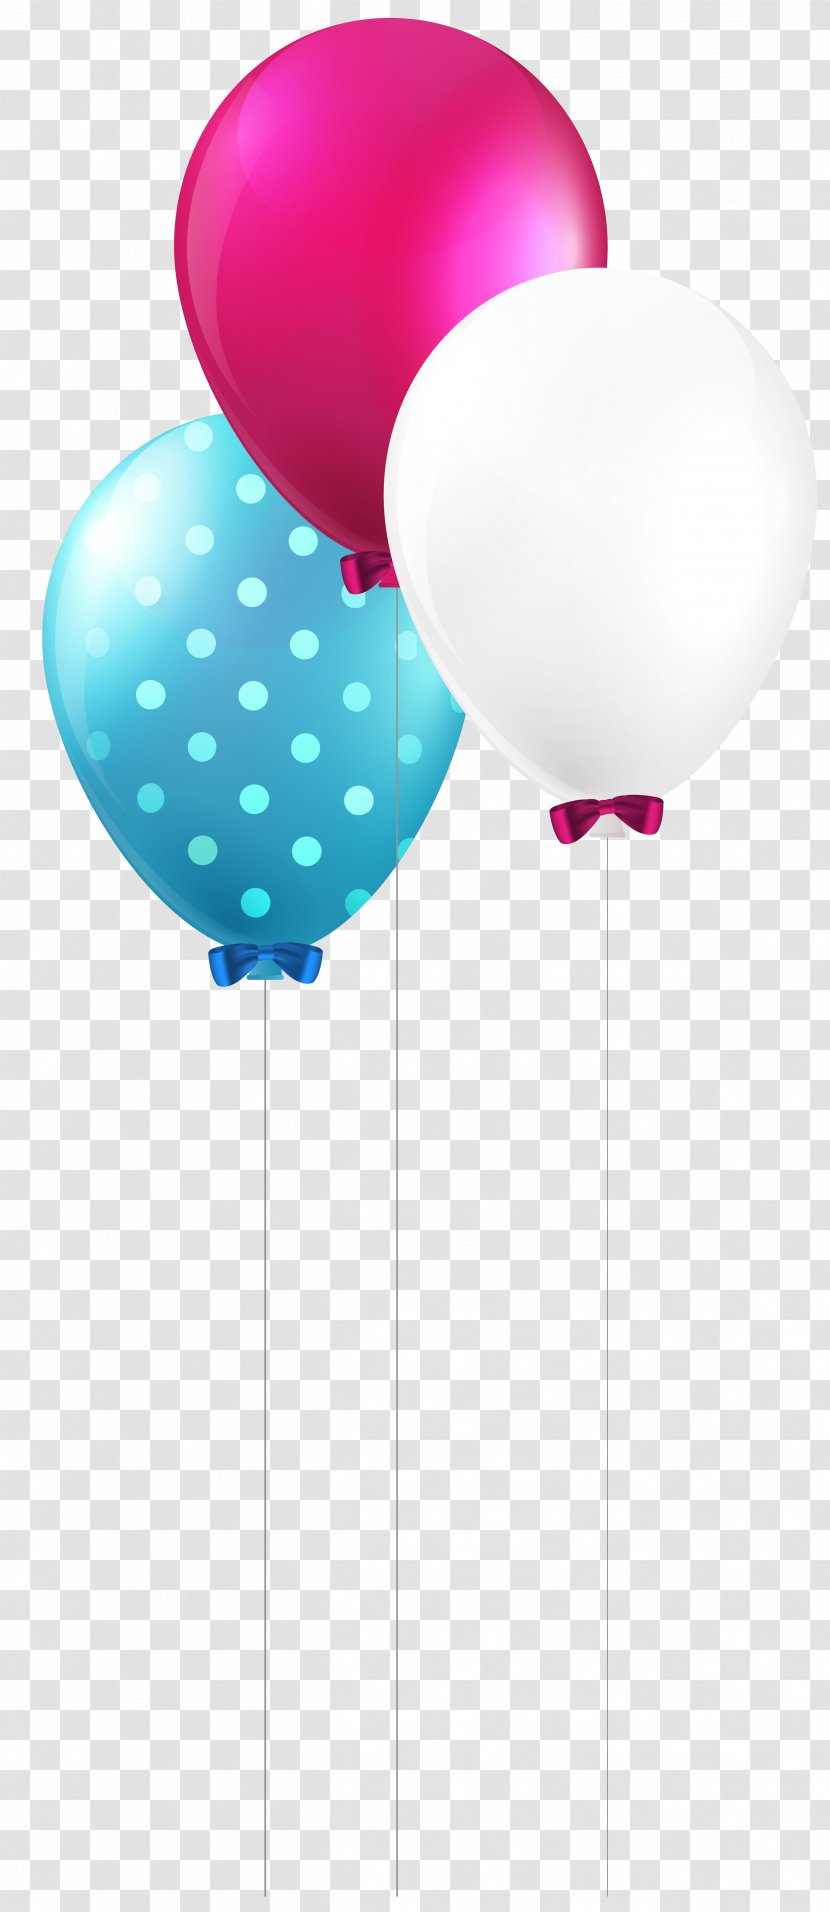 Balloon Heart - Balloons Clip Art Image Transparent PNG